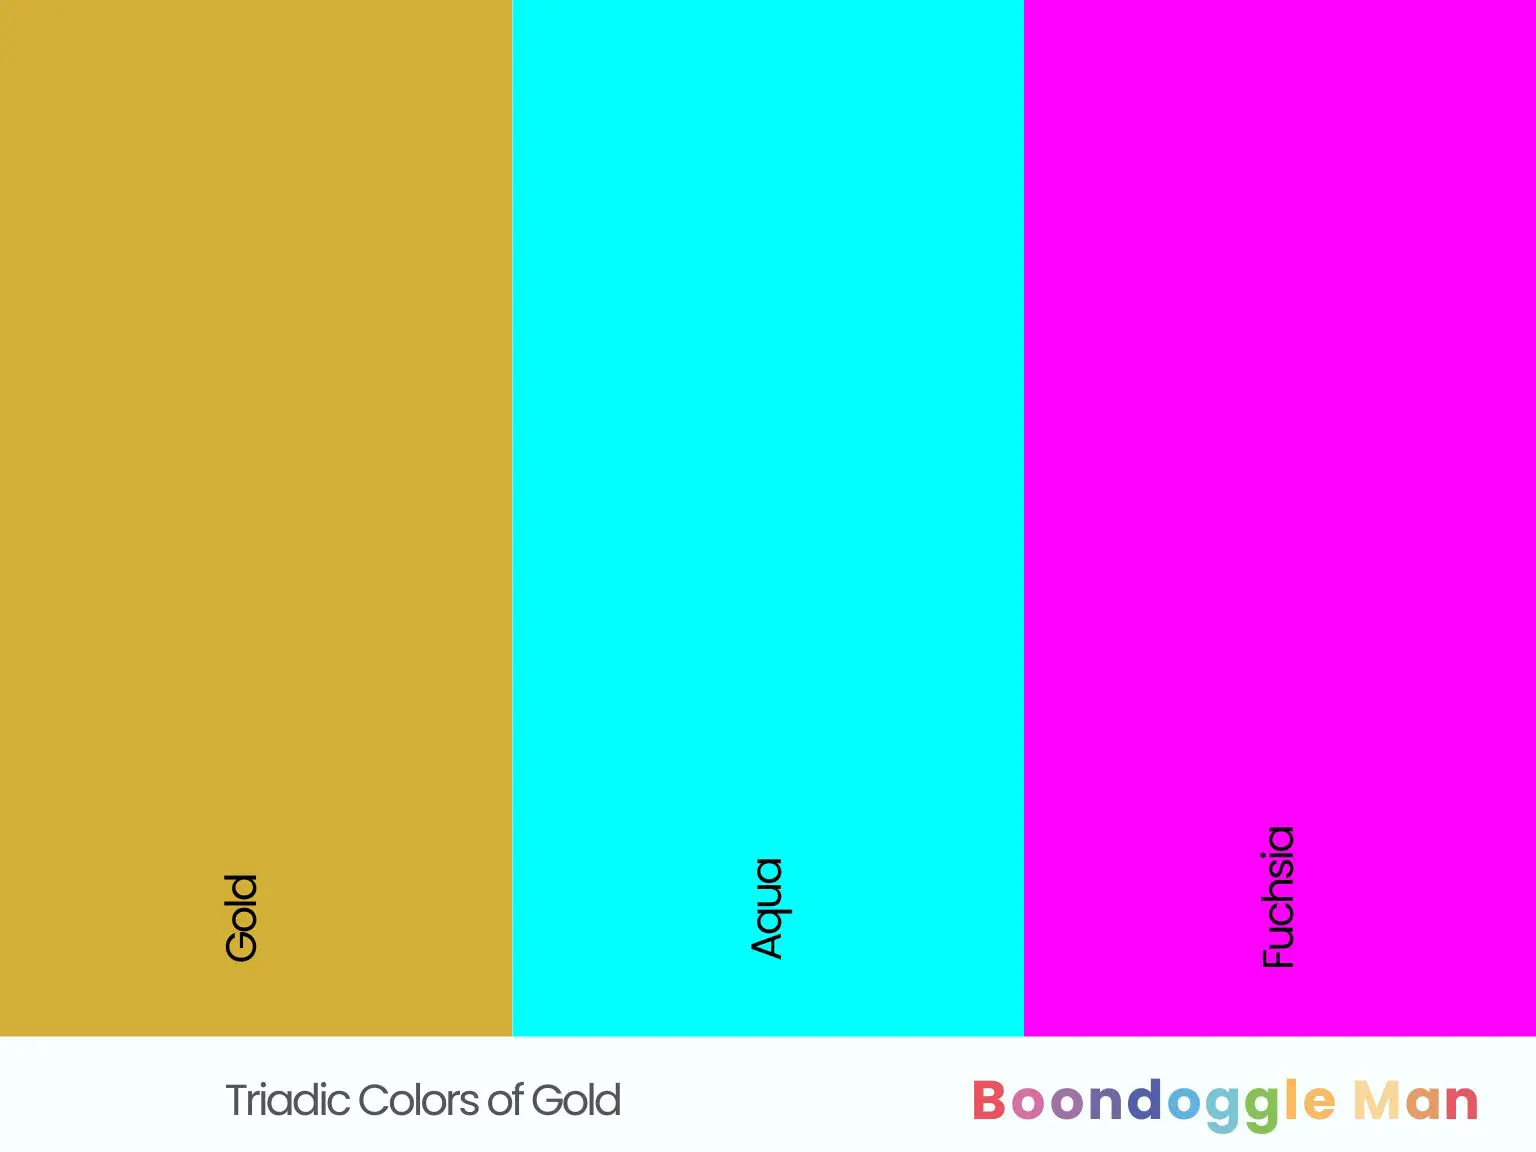 Triadic Colors of Gold